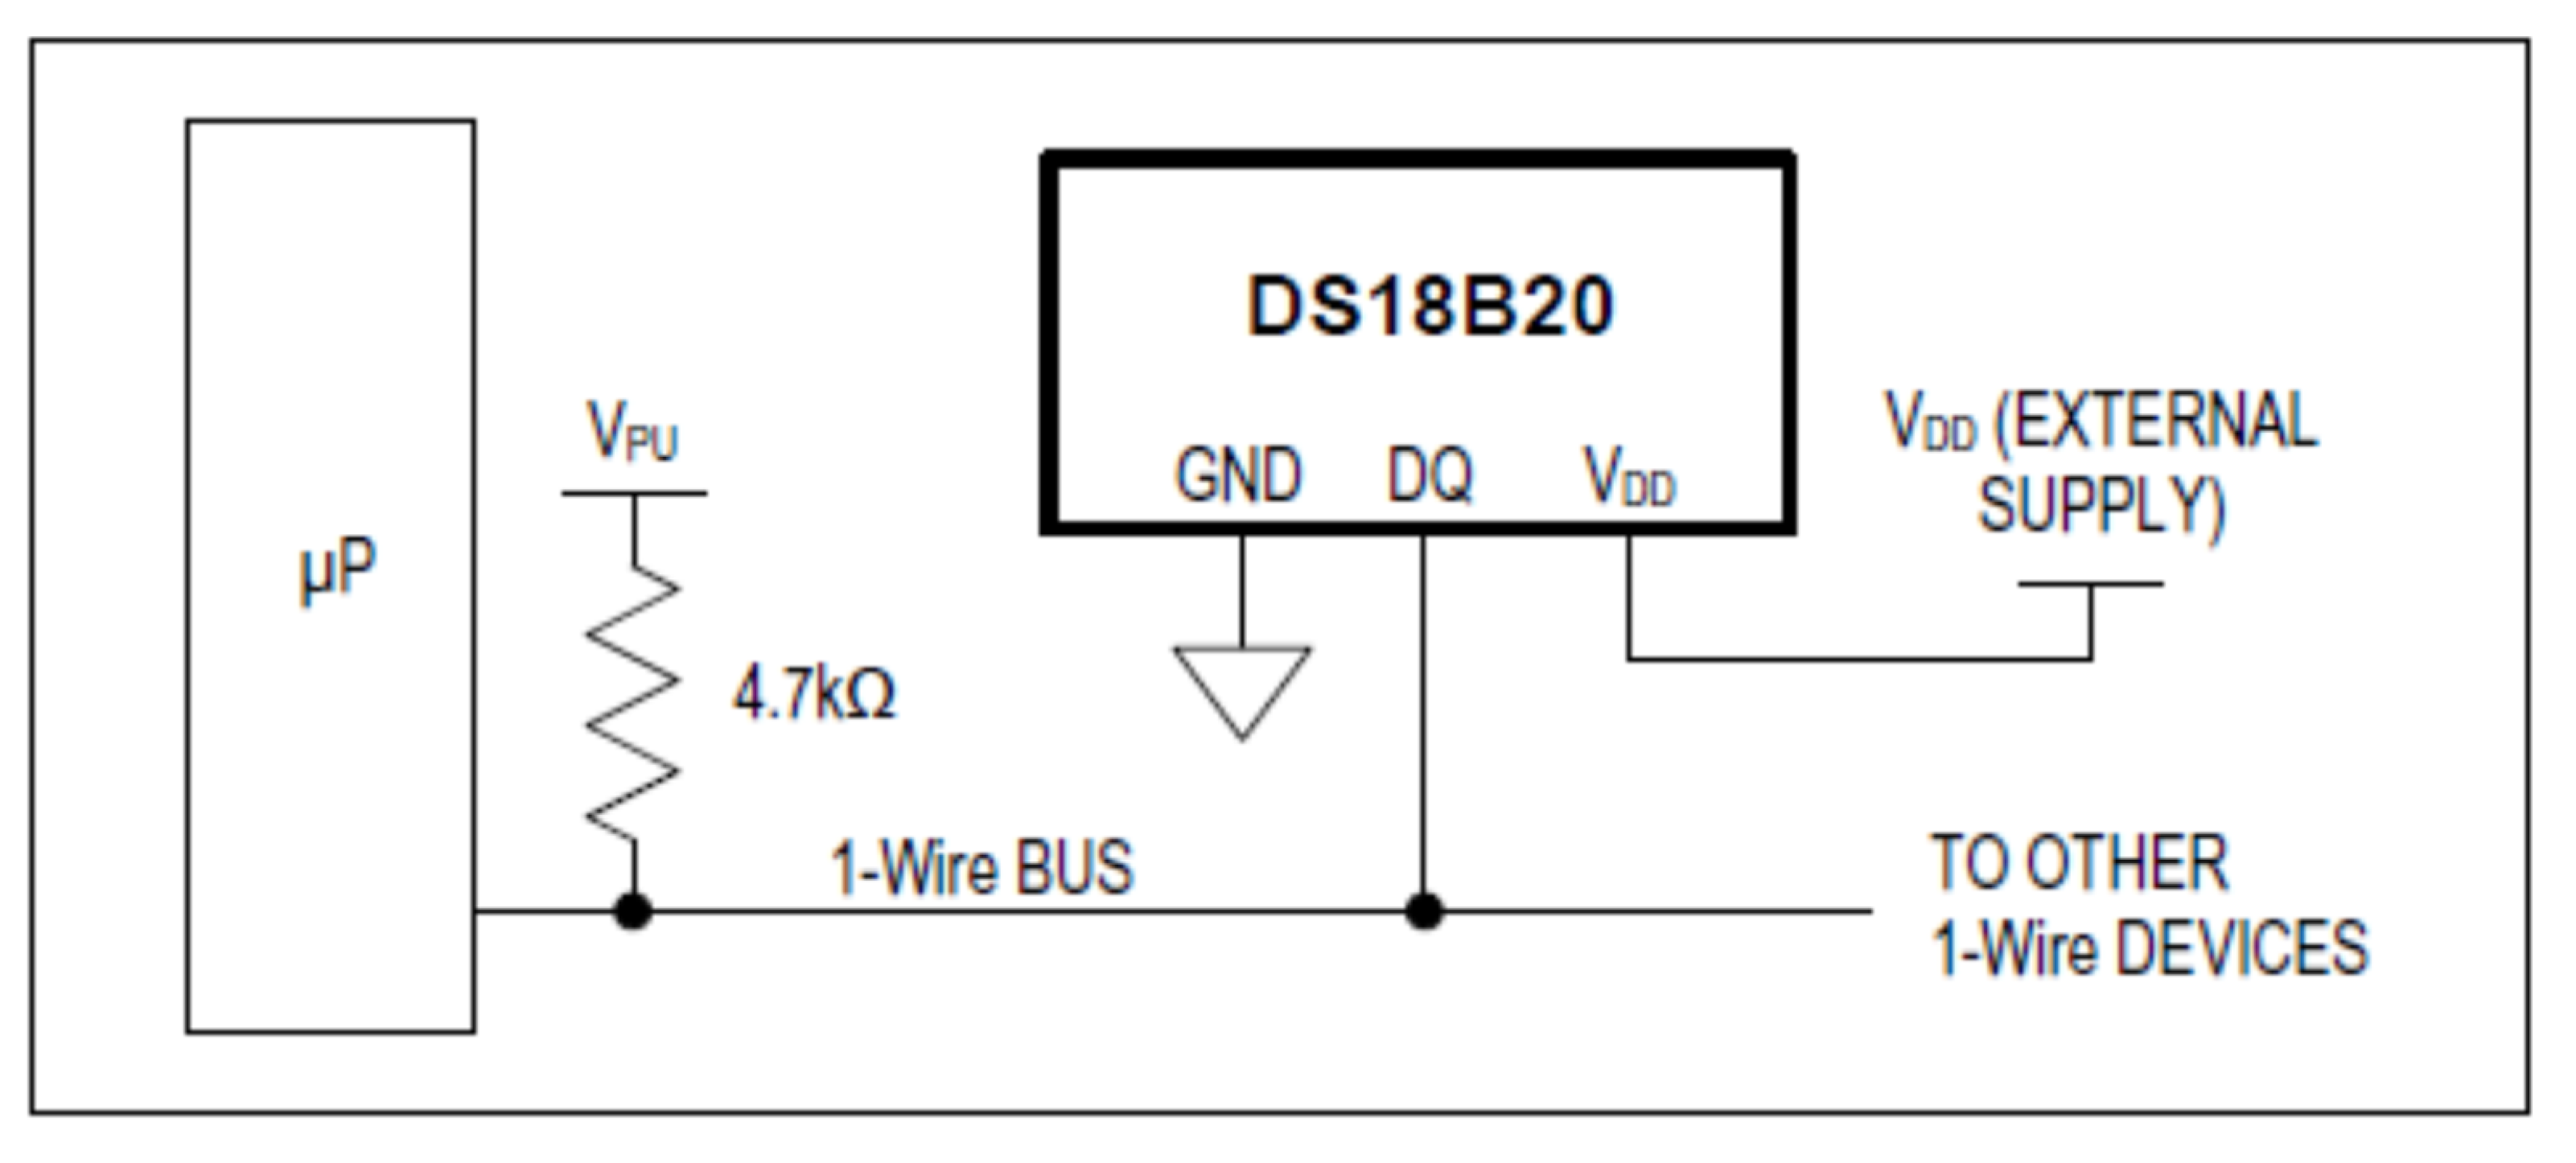 Temperature Sensor - 1-wire DS18B20 Sensor For Fleet Management